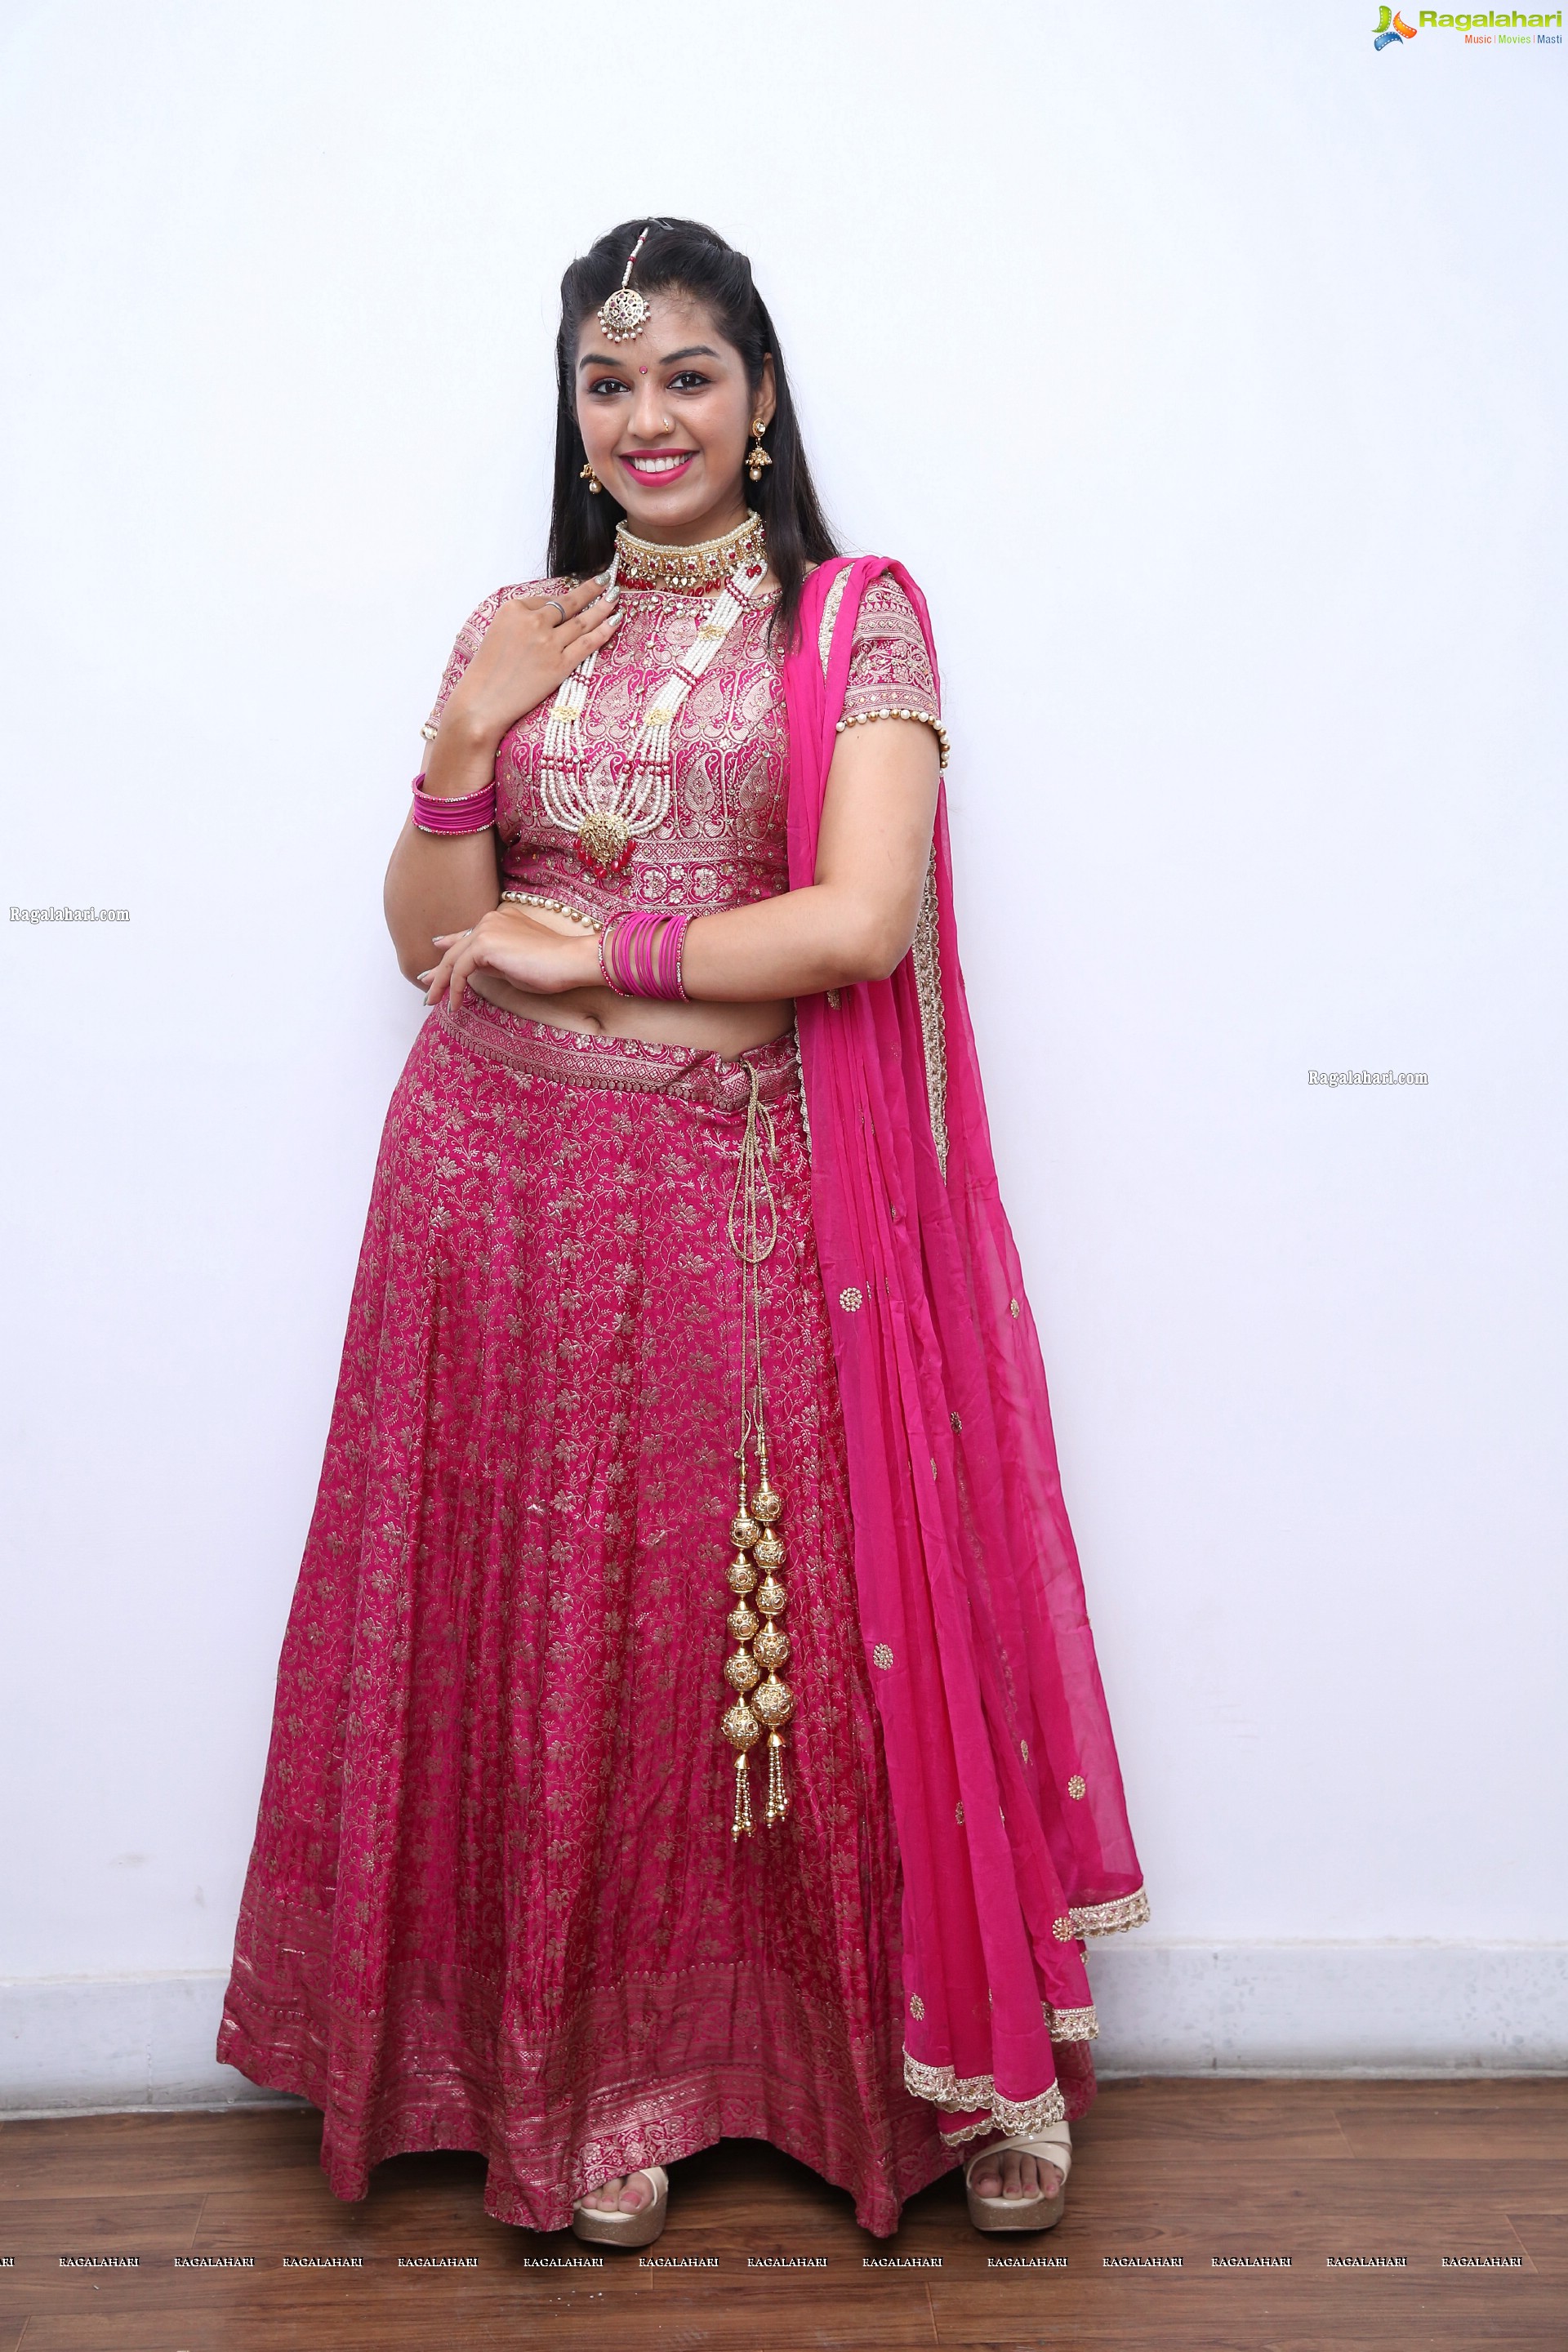 Shruthi Sharma in Rani Pink Lehenga Choli, HD Photo Gallery